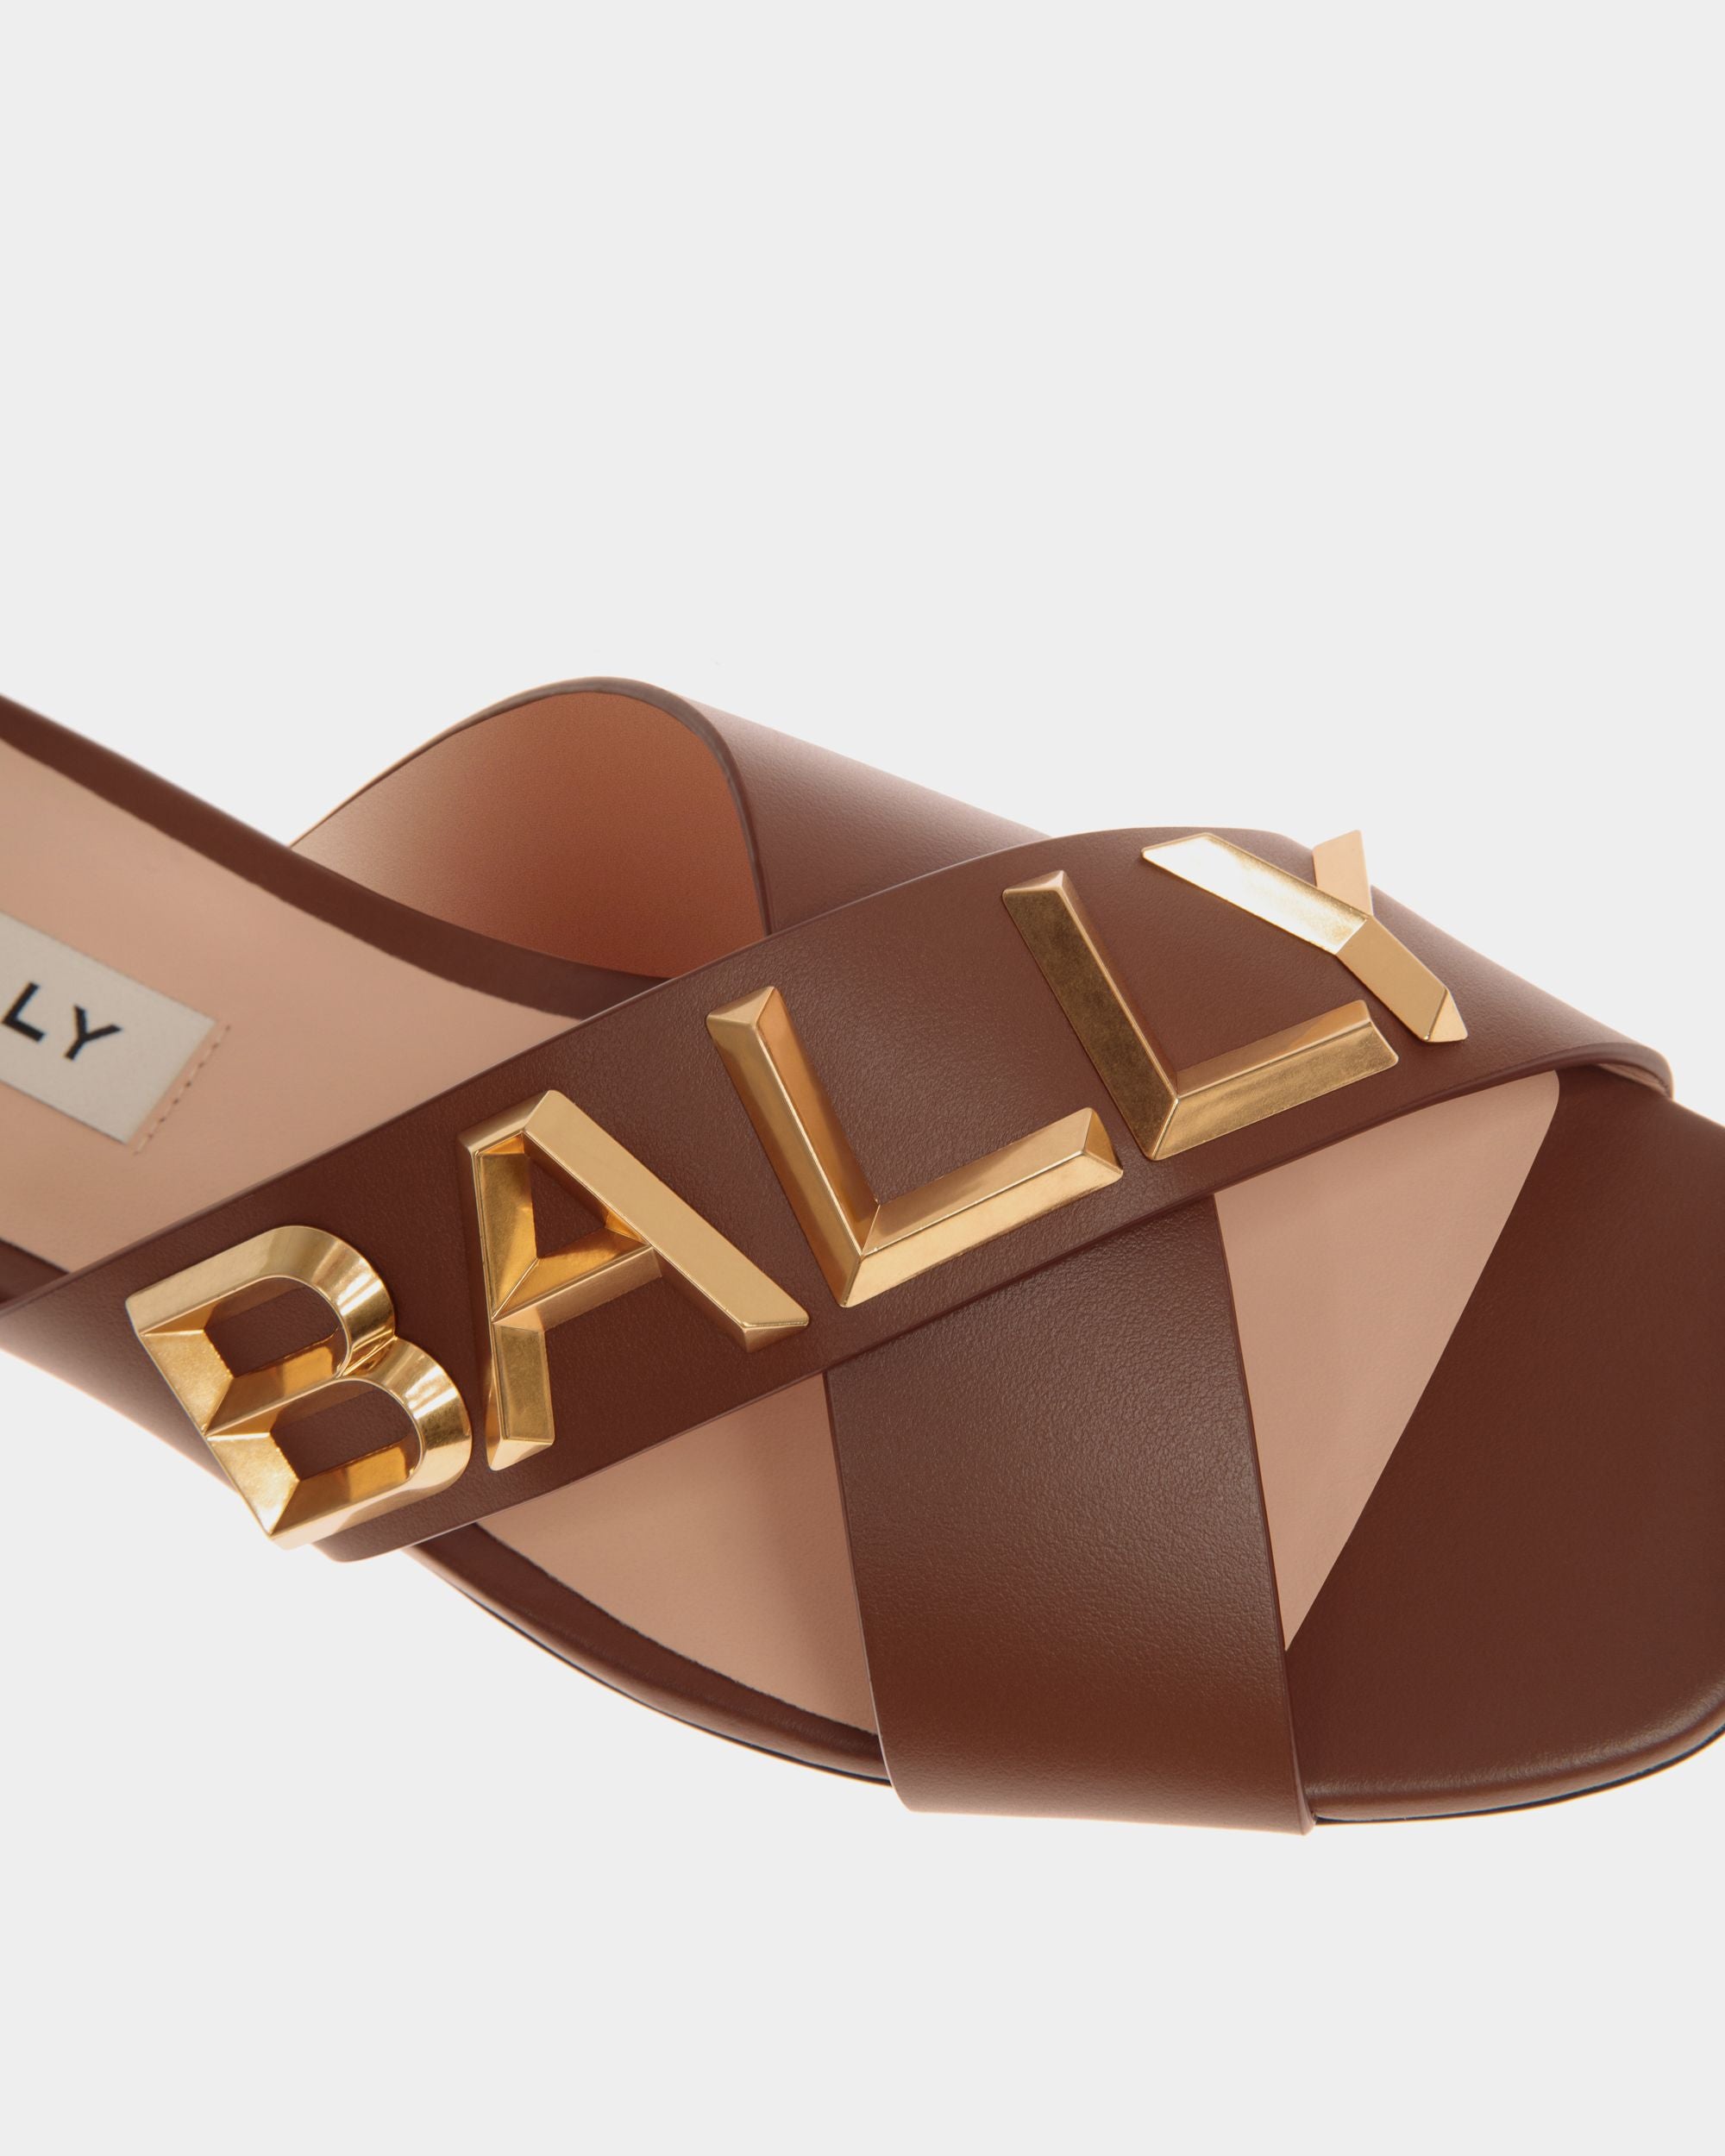 Bally Spell | Women's Flat Slide in Brown Leather | Bally | Still Life Detail